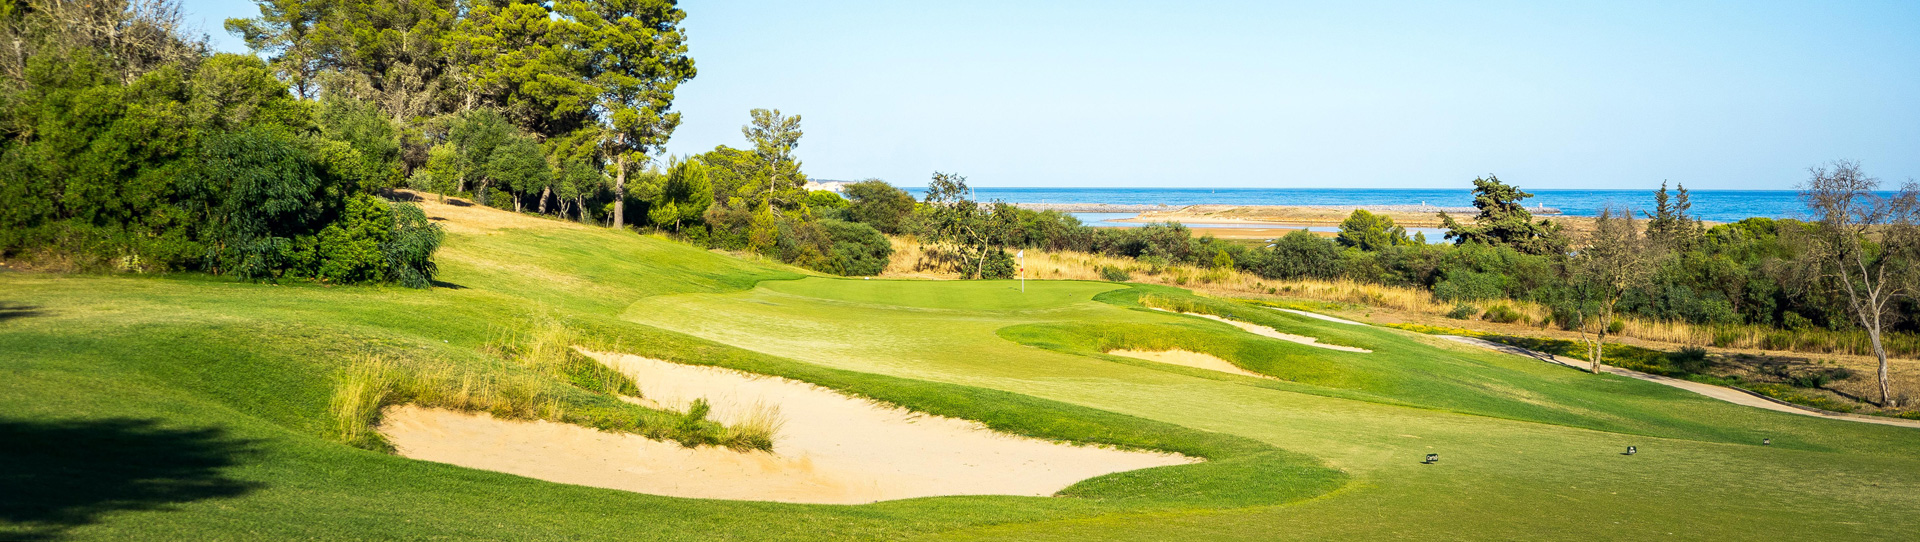 Portugal golf courses - Palmares Golf Course - Photo 1